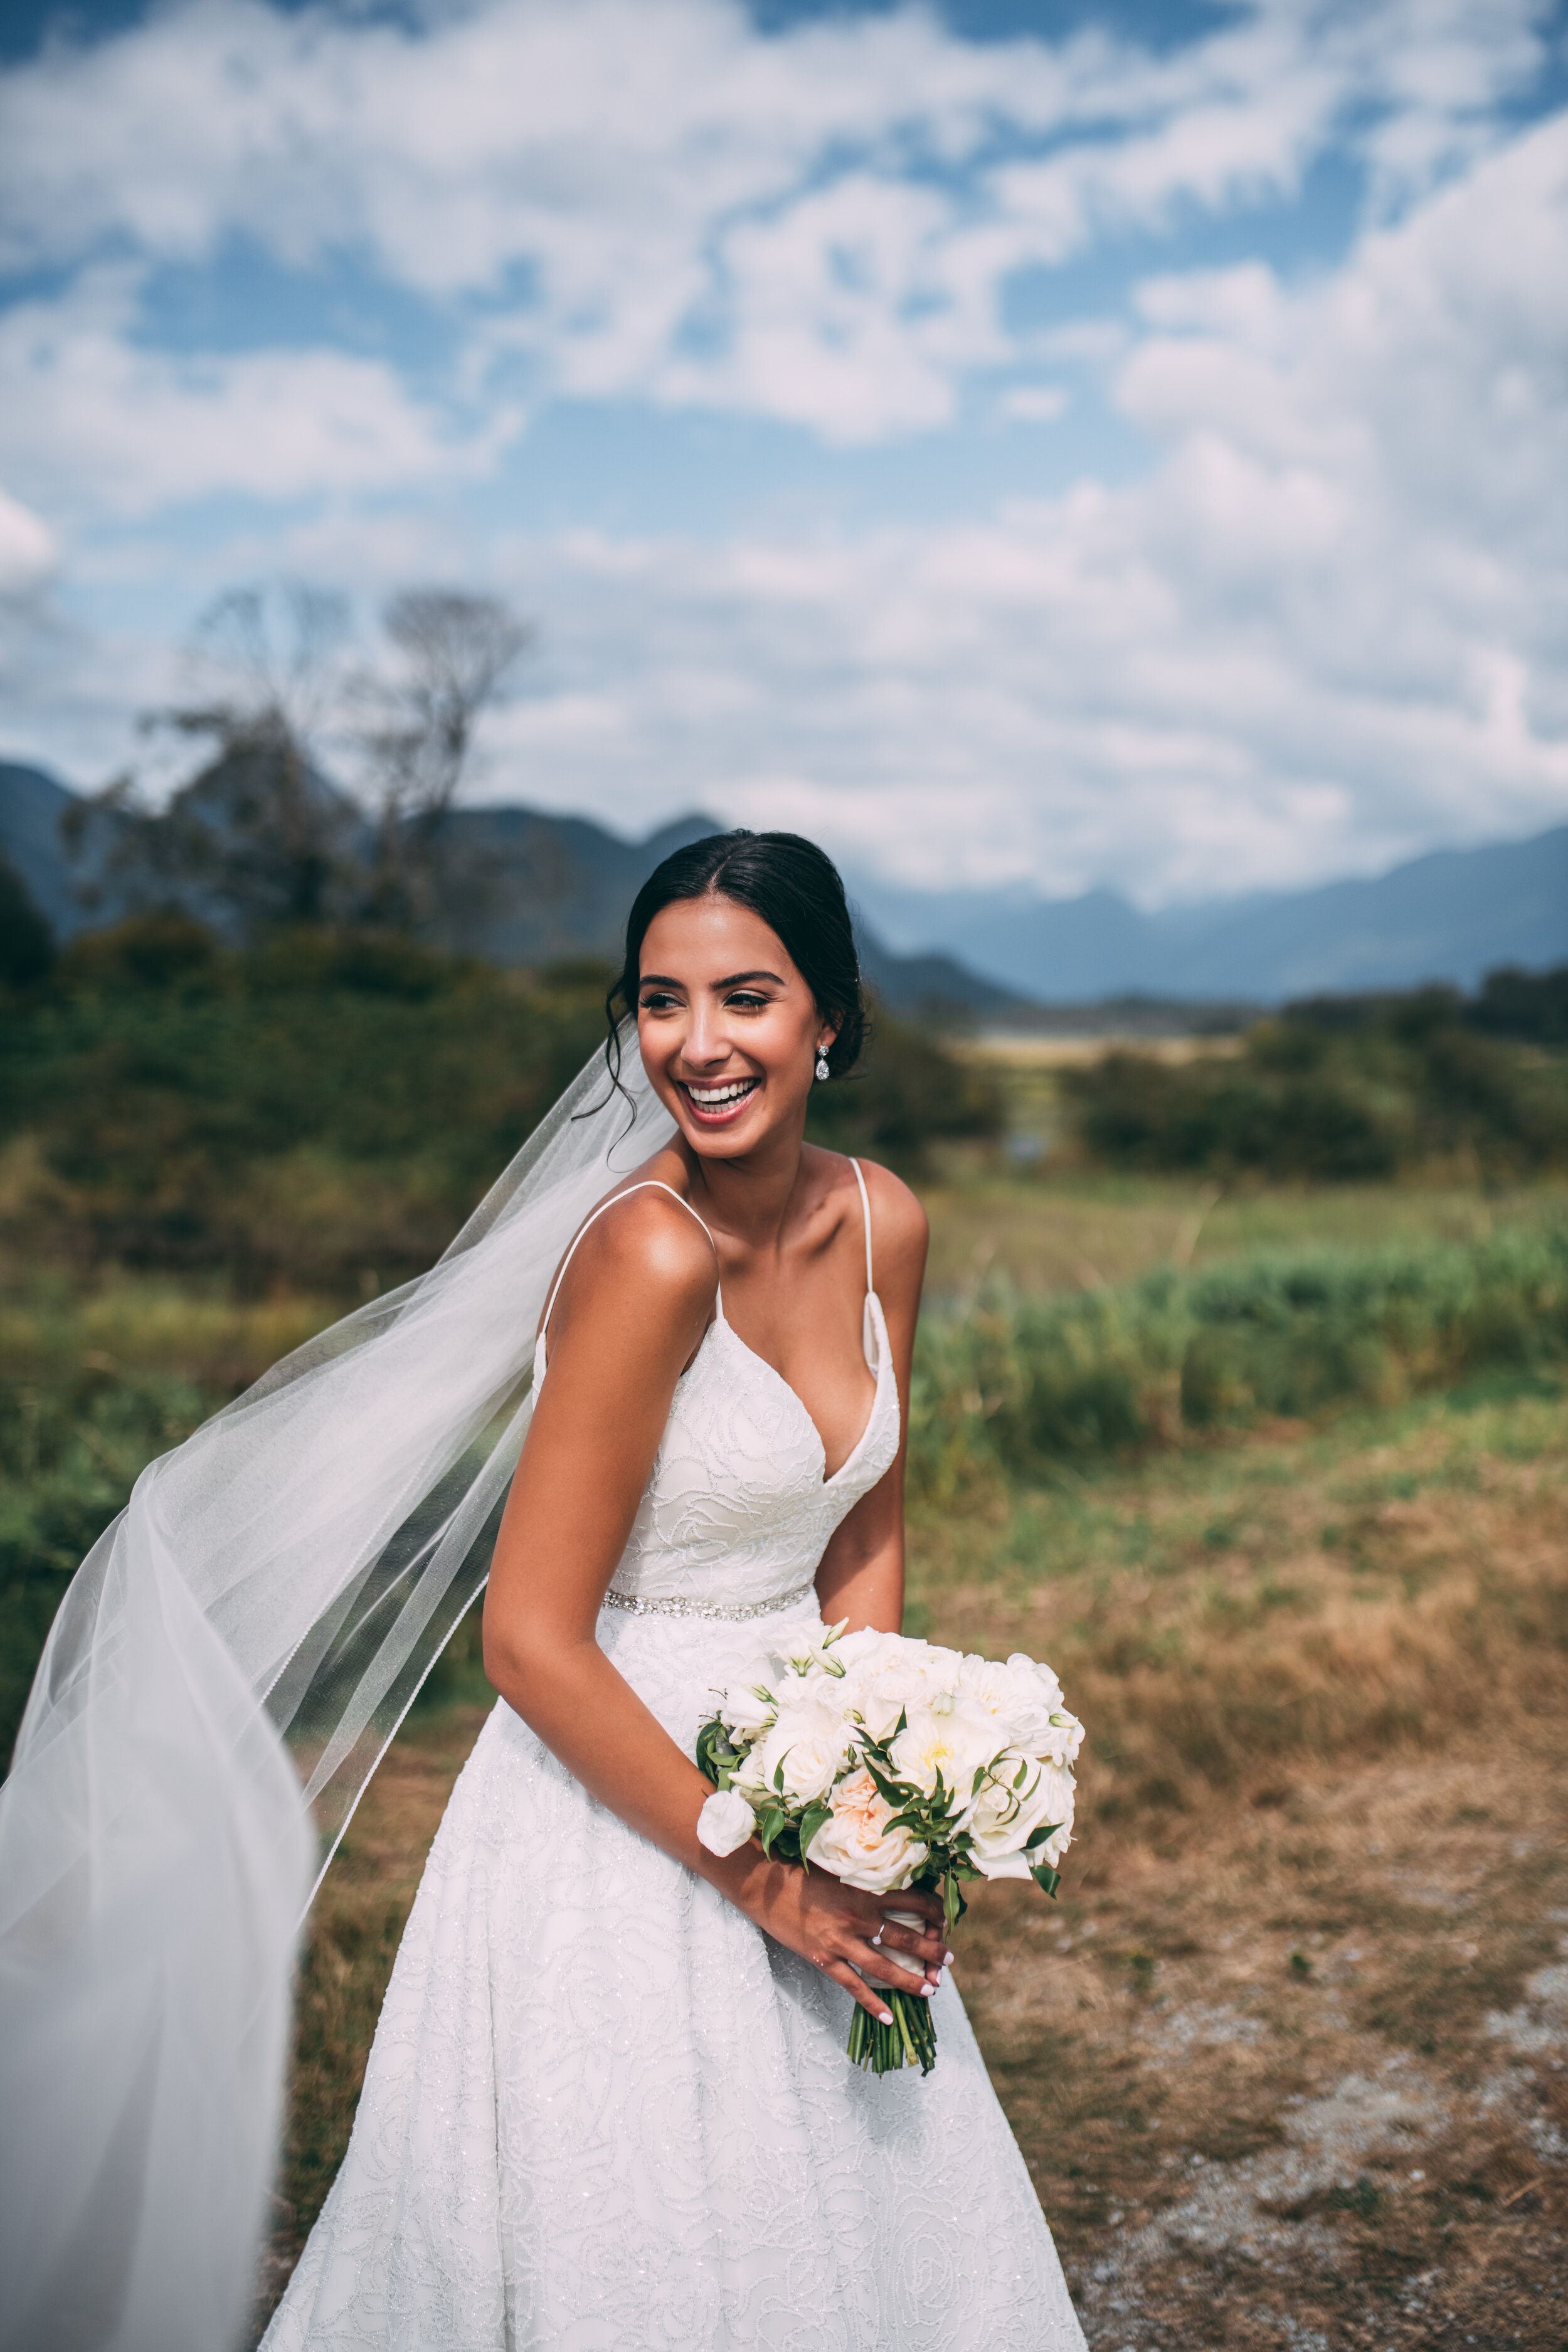 Natasha & Lee Sneak Peeks - August 31, 2019 Swaneset Wedding-1496.jpg